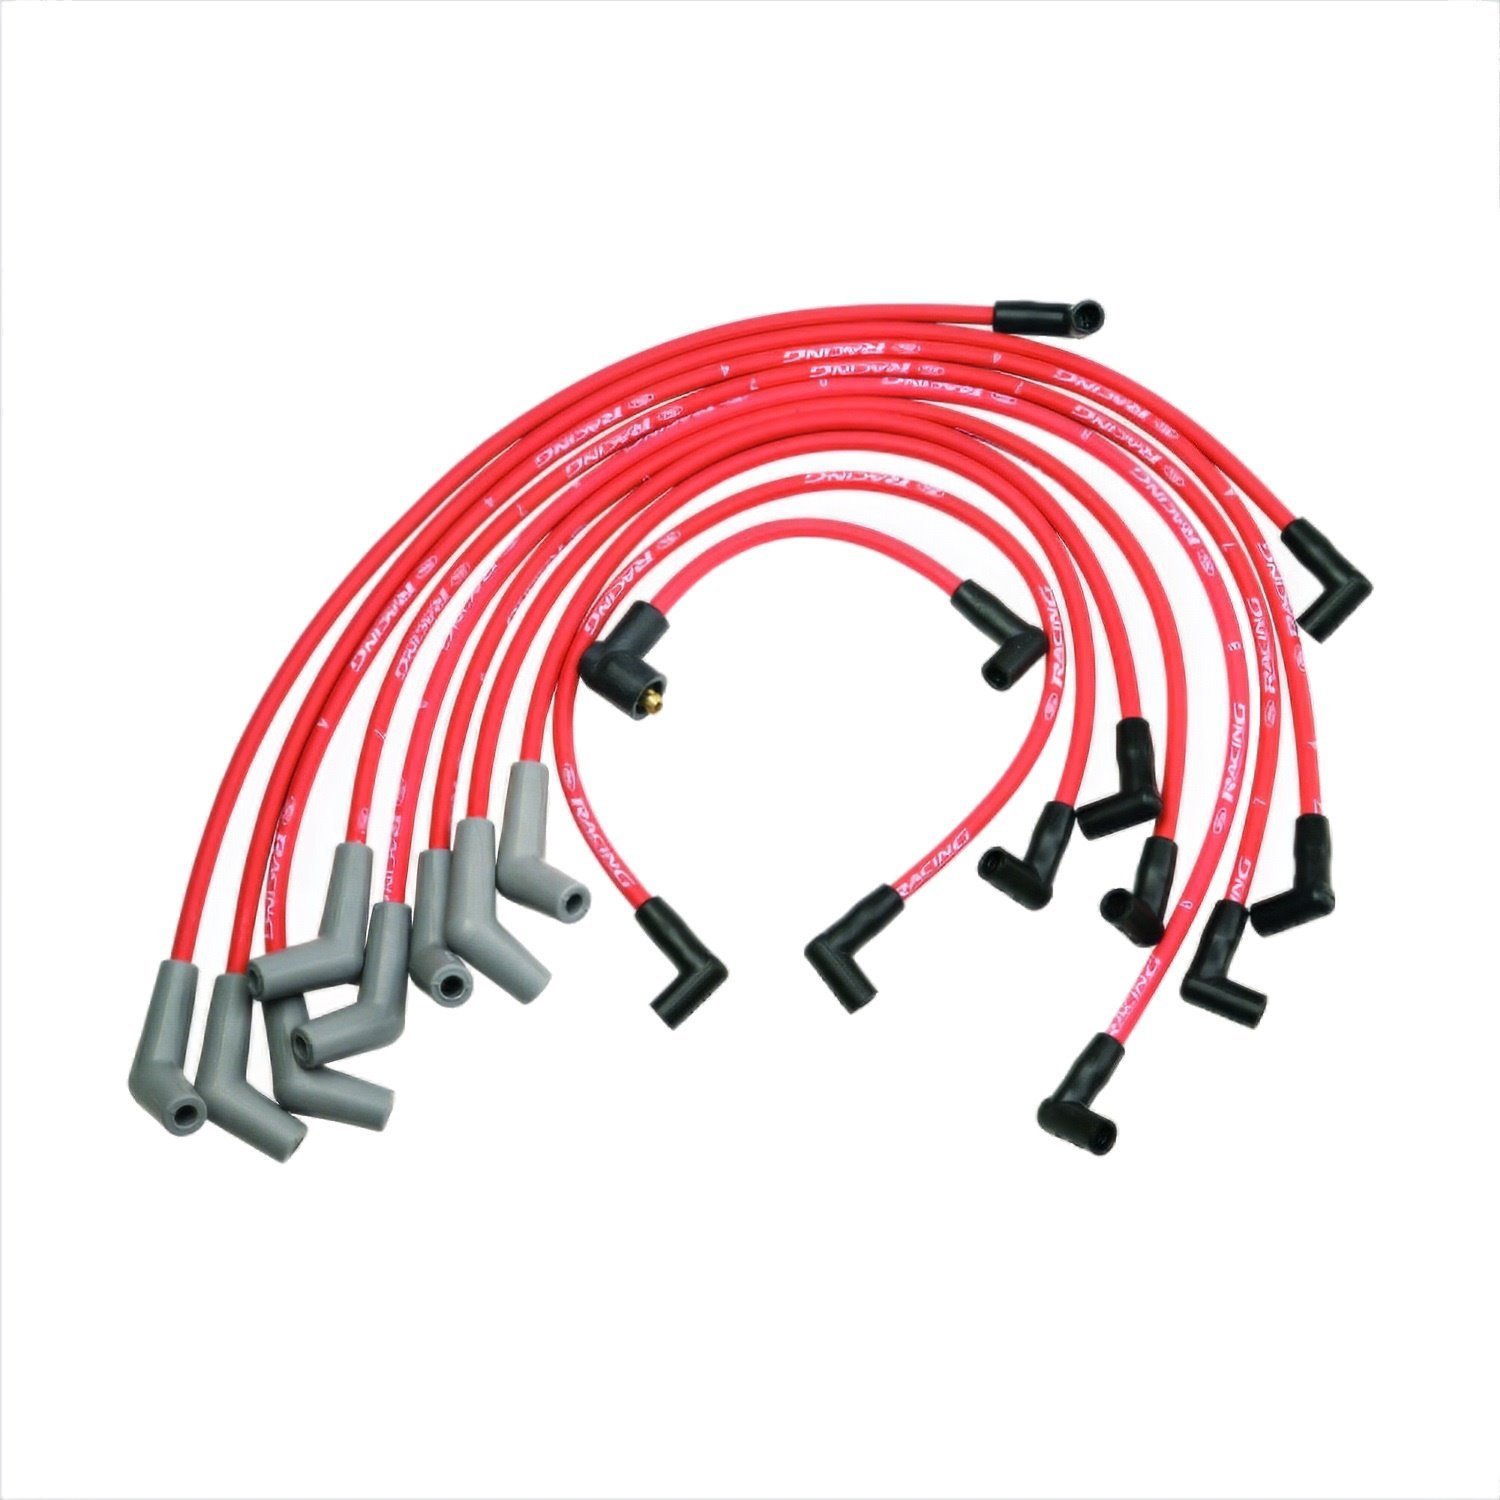 M-12259-R301 Spark Plug Wire Set Fits 5.0/5.8L V8 Engines